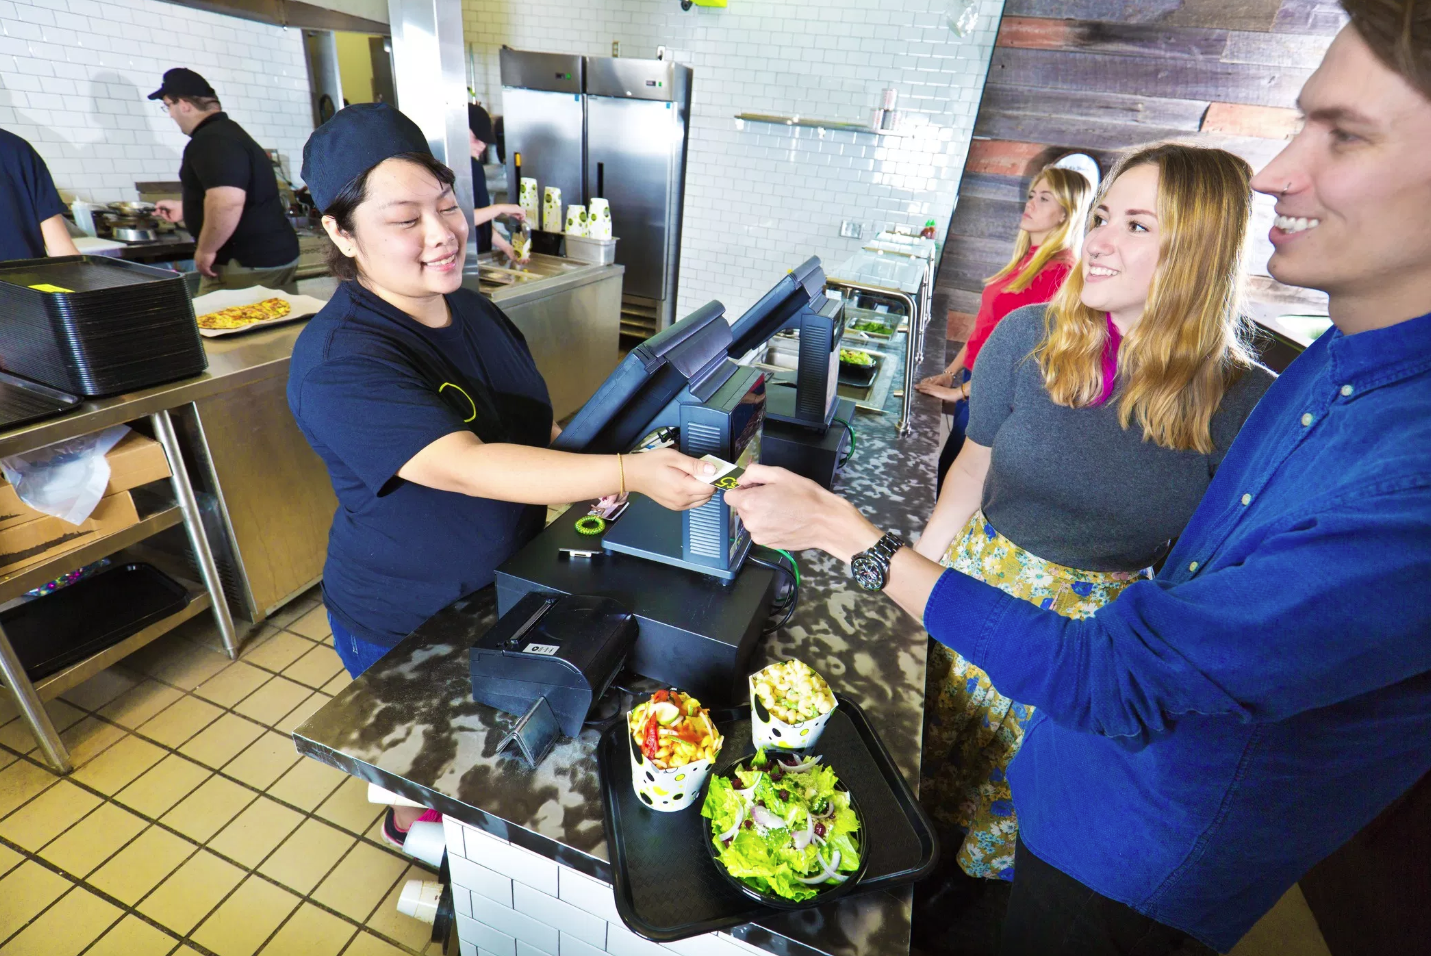 Restaurant employee interacting with customers